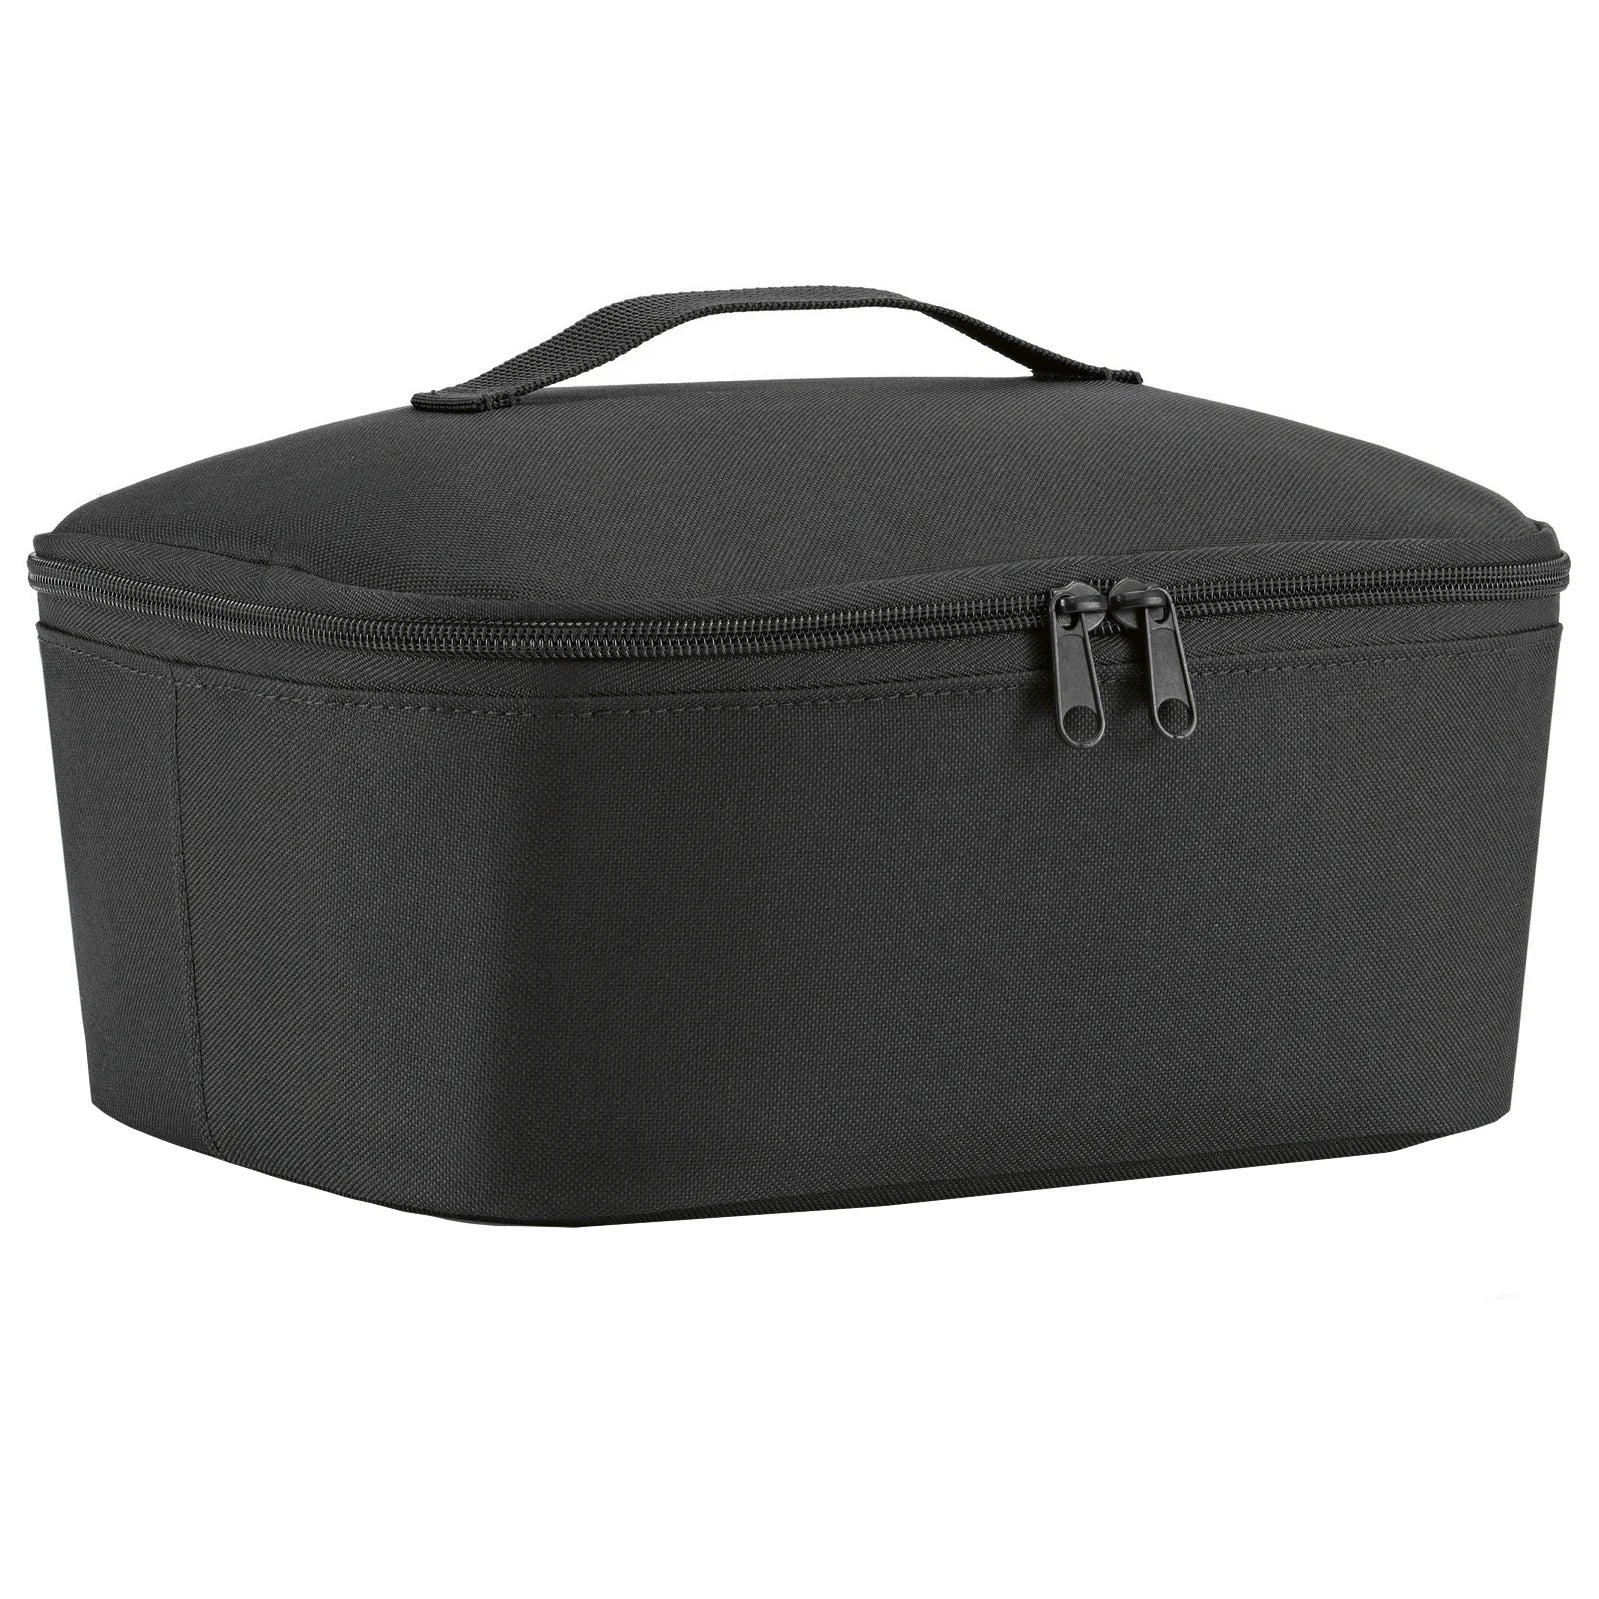 Reisenthel Shopping Coolerbag M Pocket 28 cm - Black